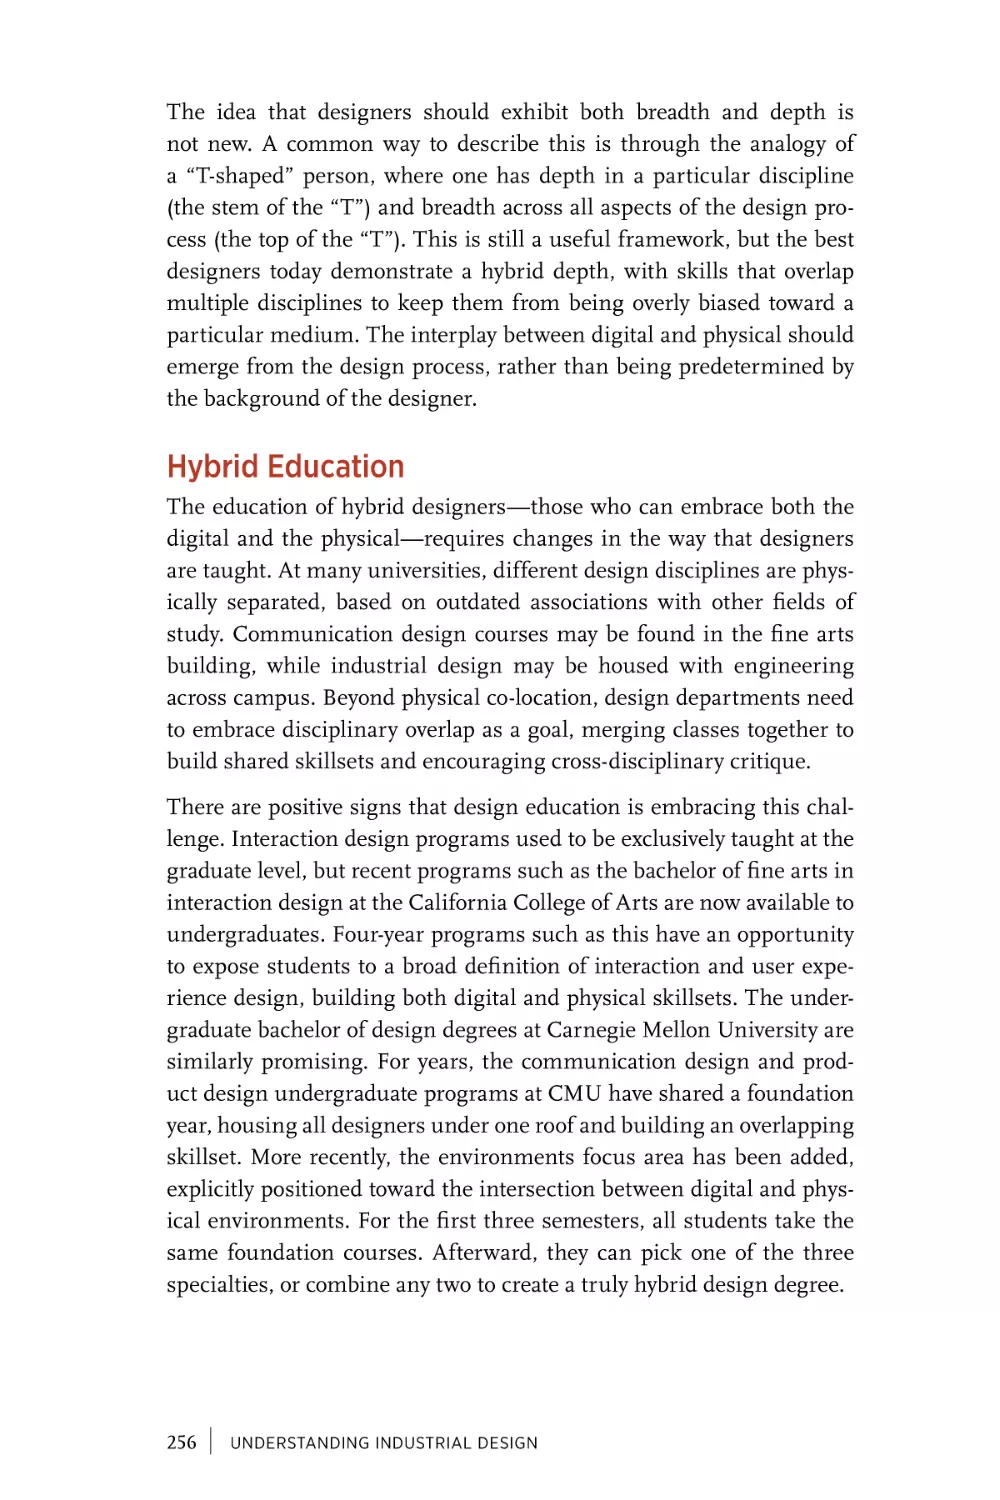 Hybrid Education